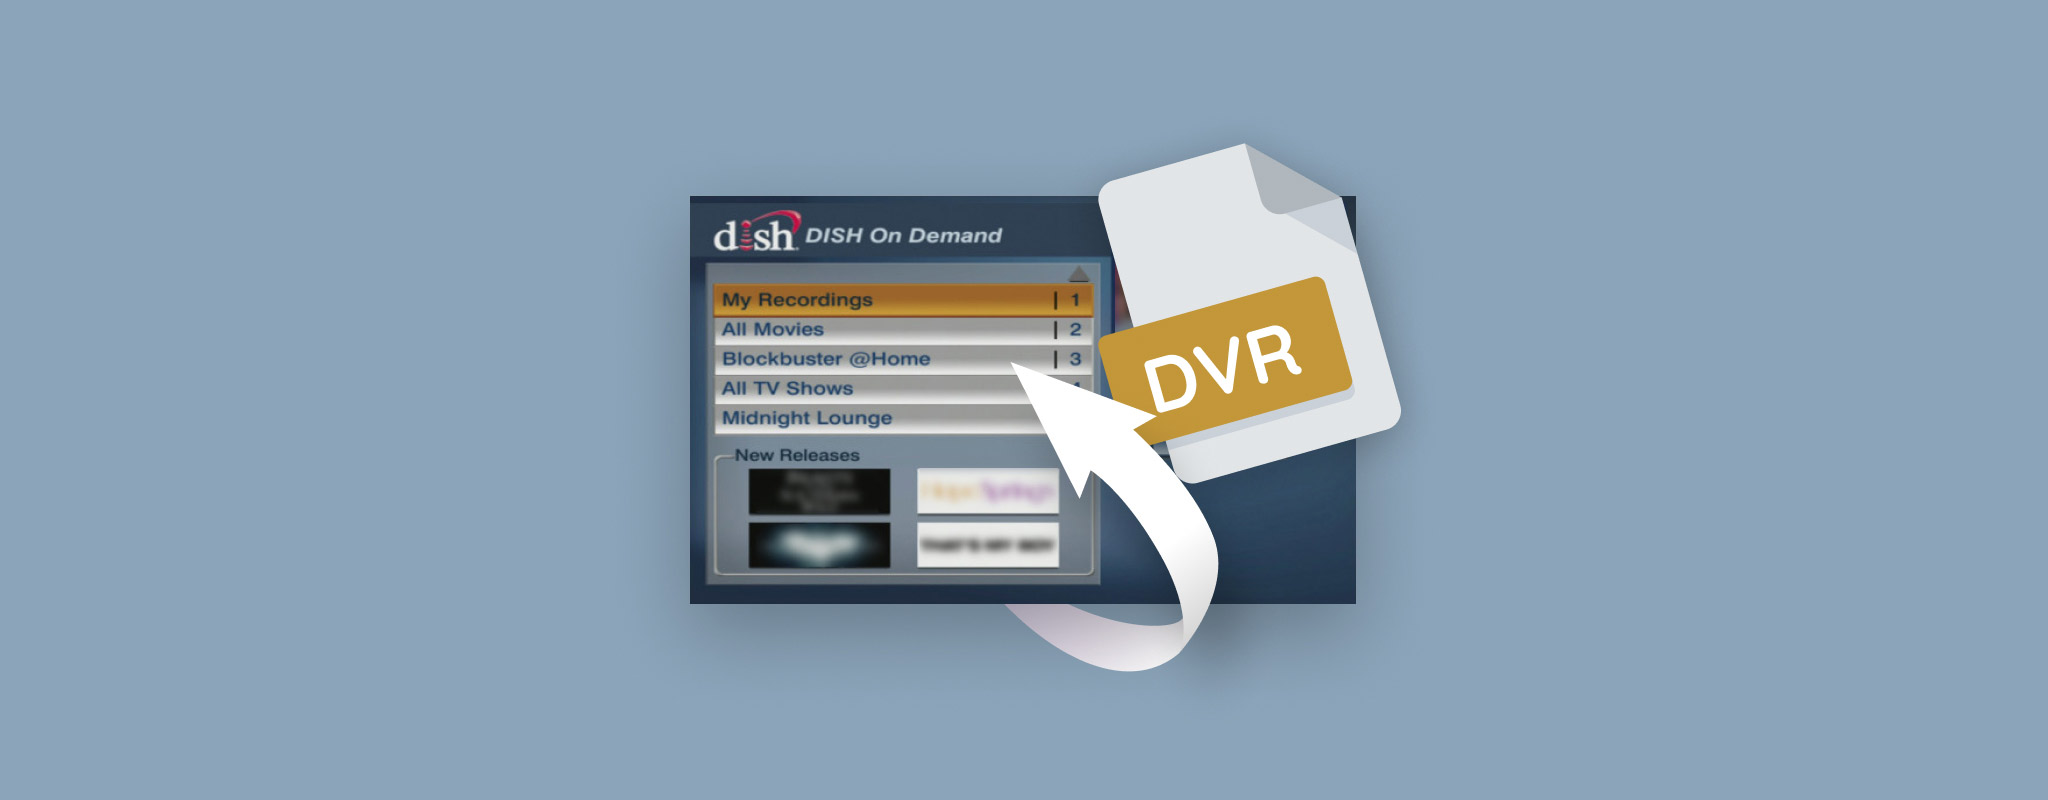 recover dish dvr recordings